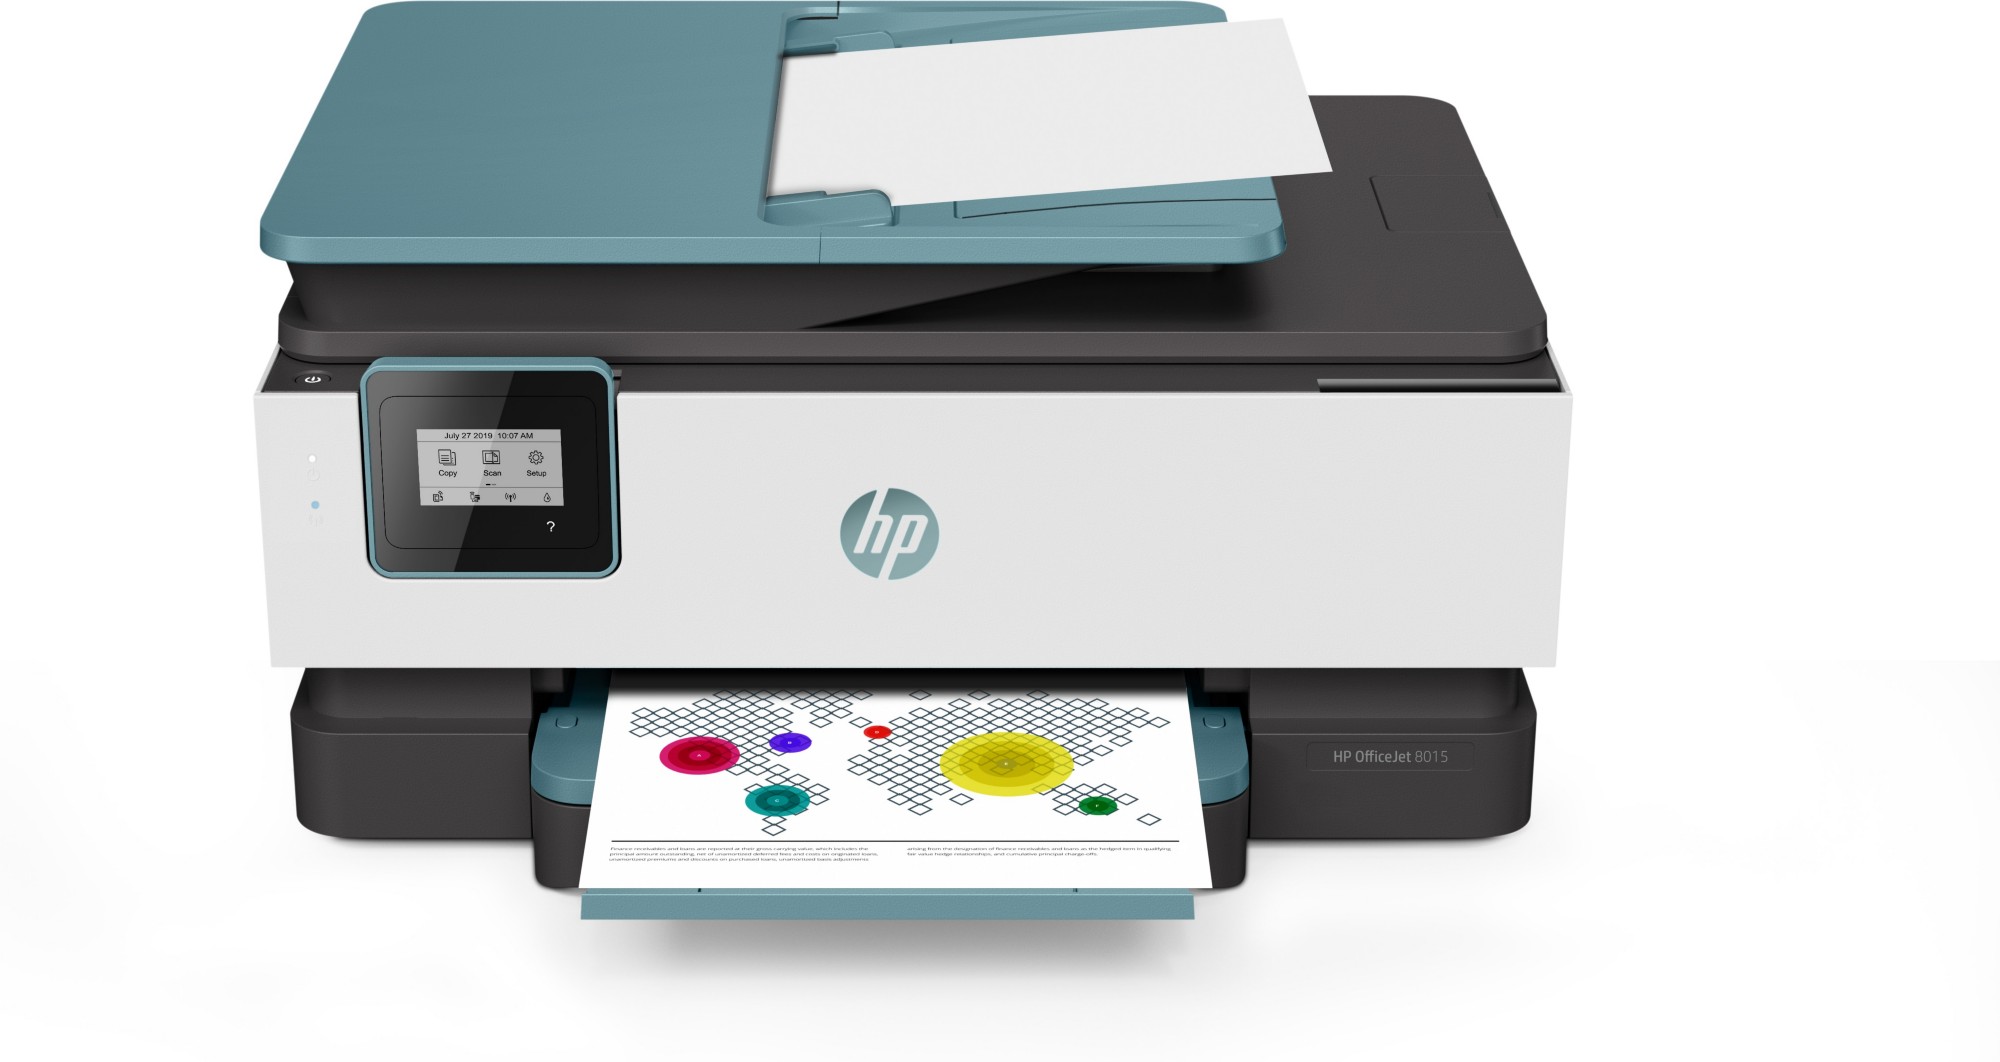 Refurbished Hp Officejet 8015 All In One Inkjet Printer